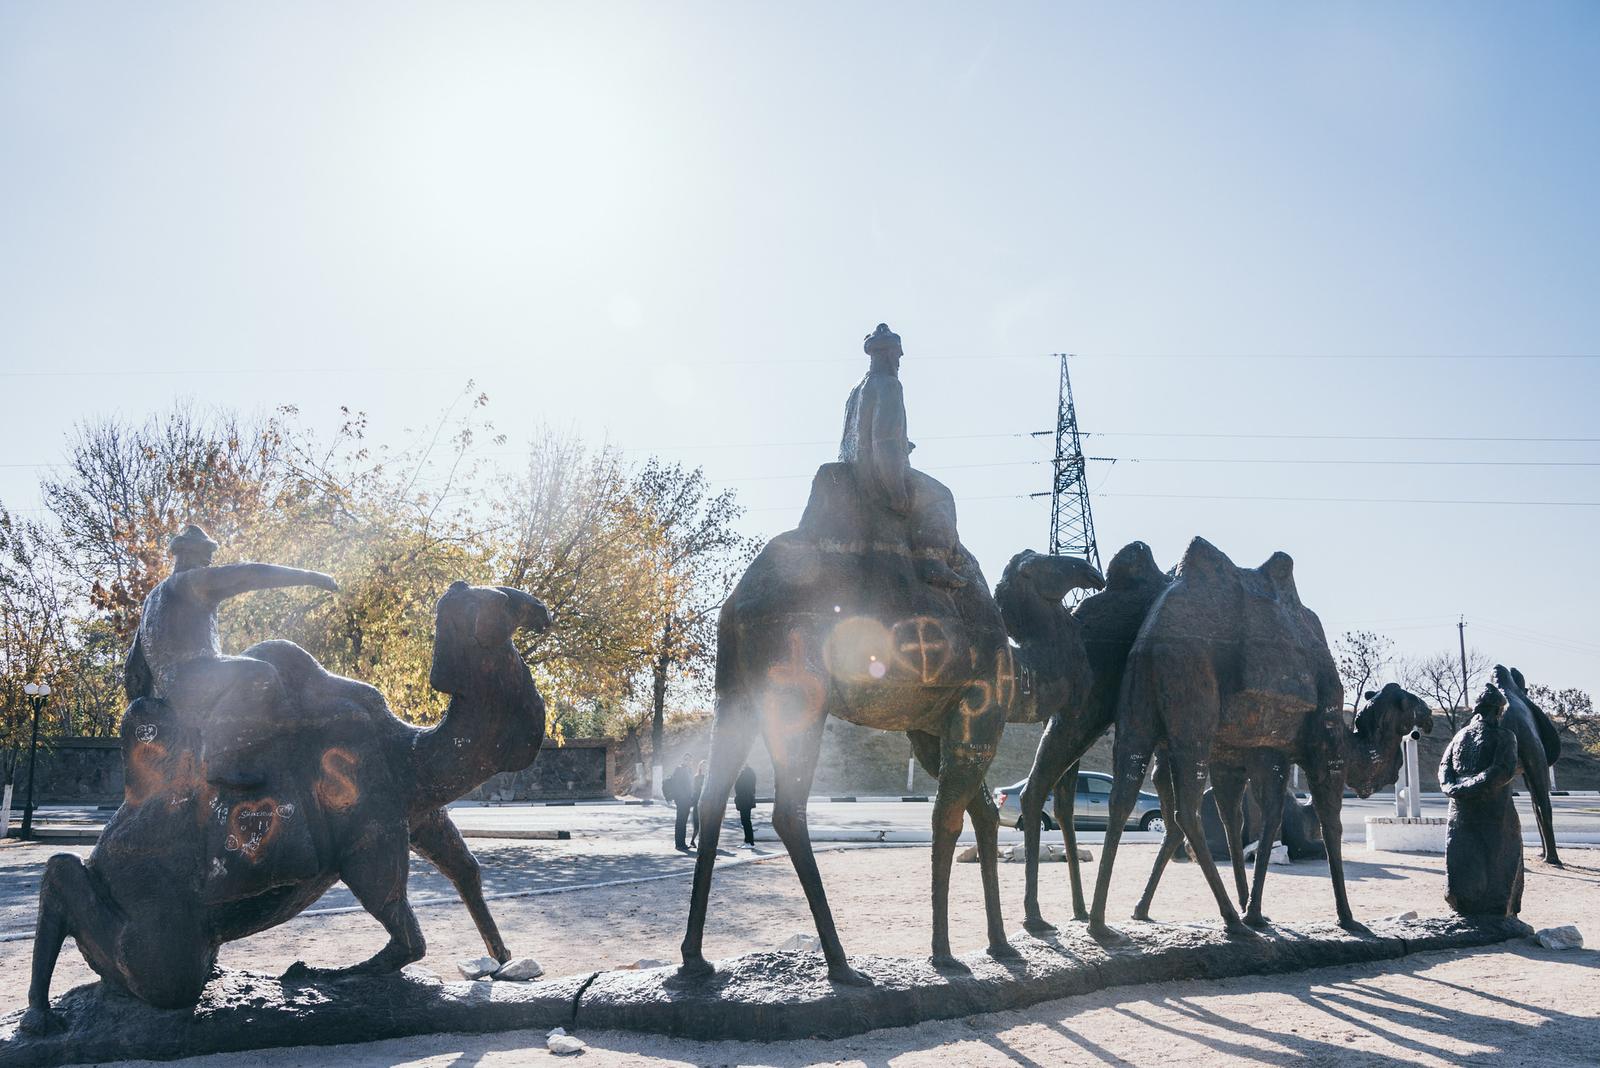 Camel Caravan Statue